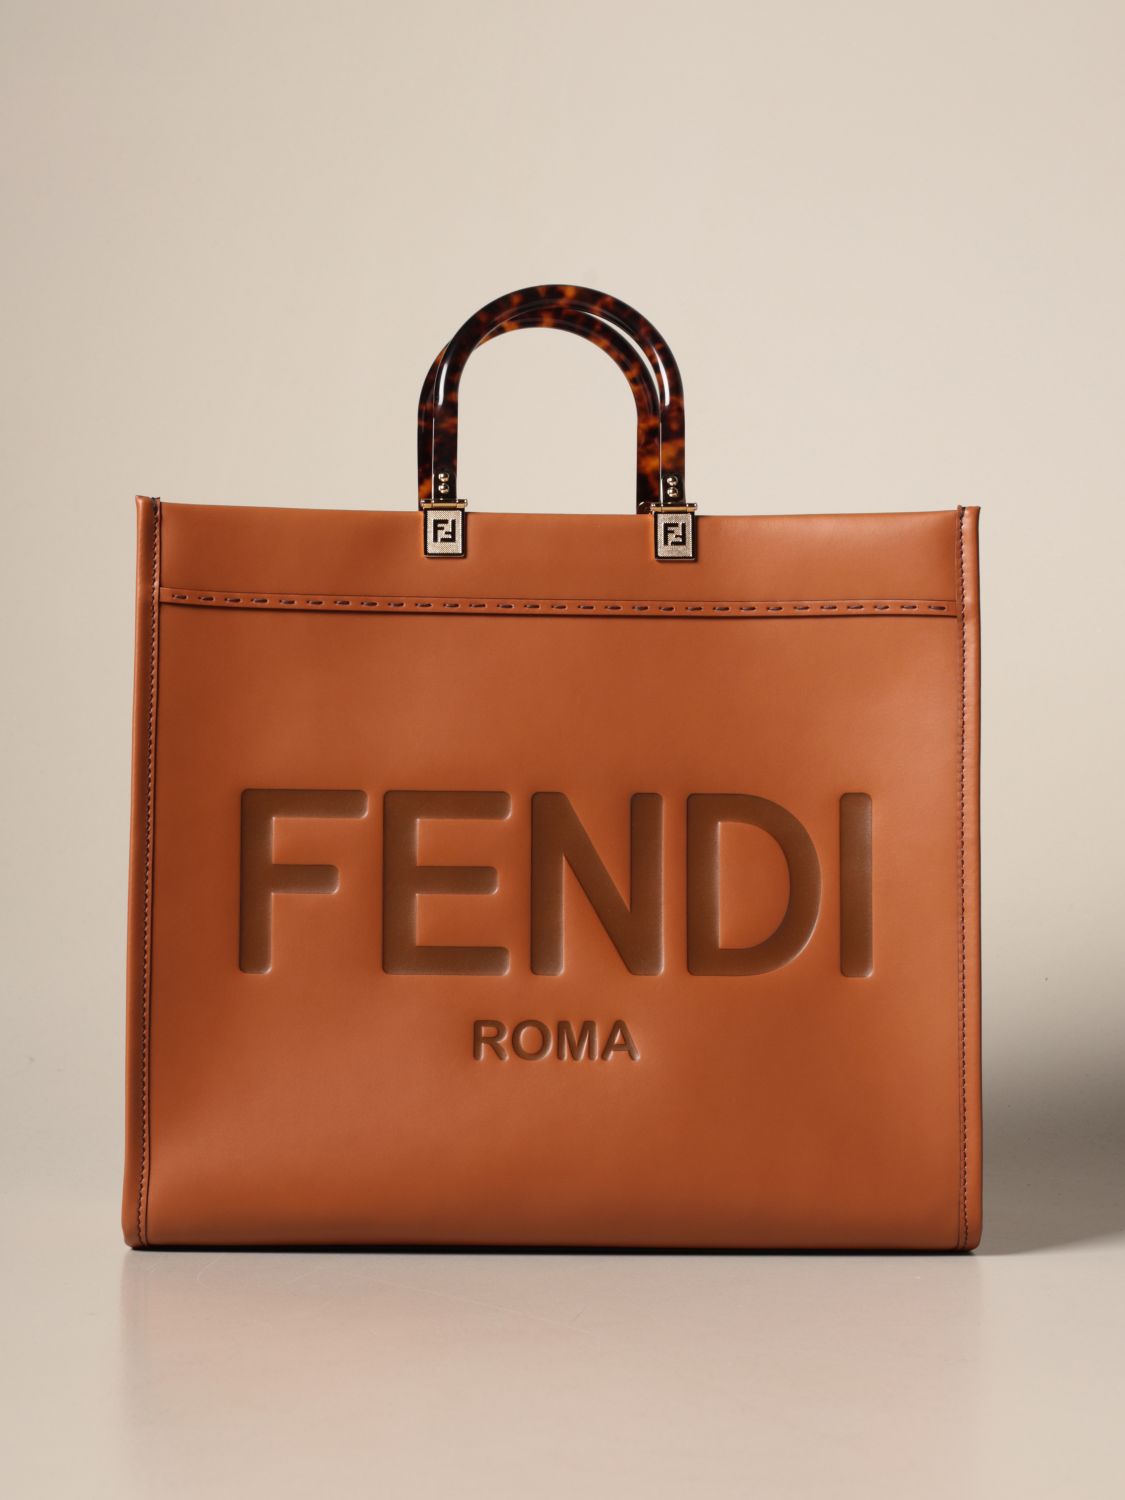 FENDI: leather shopping bag with big Roma logo - Leather | Fendi tote ...